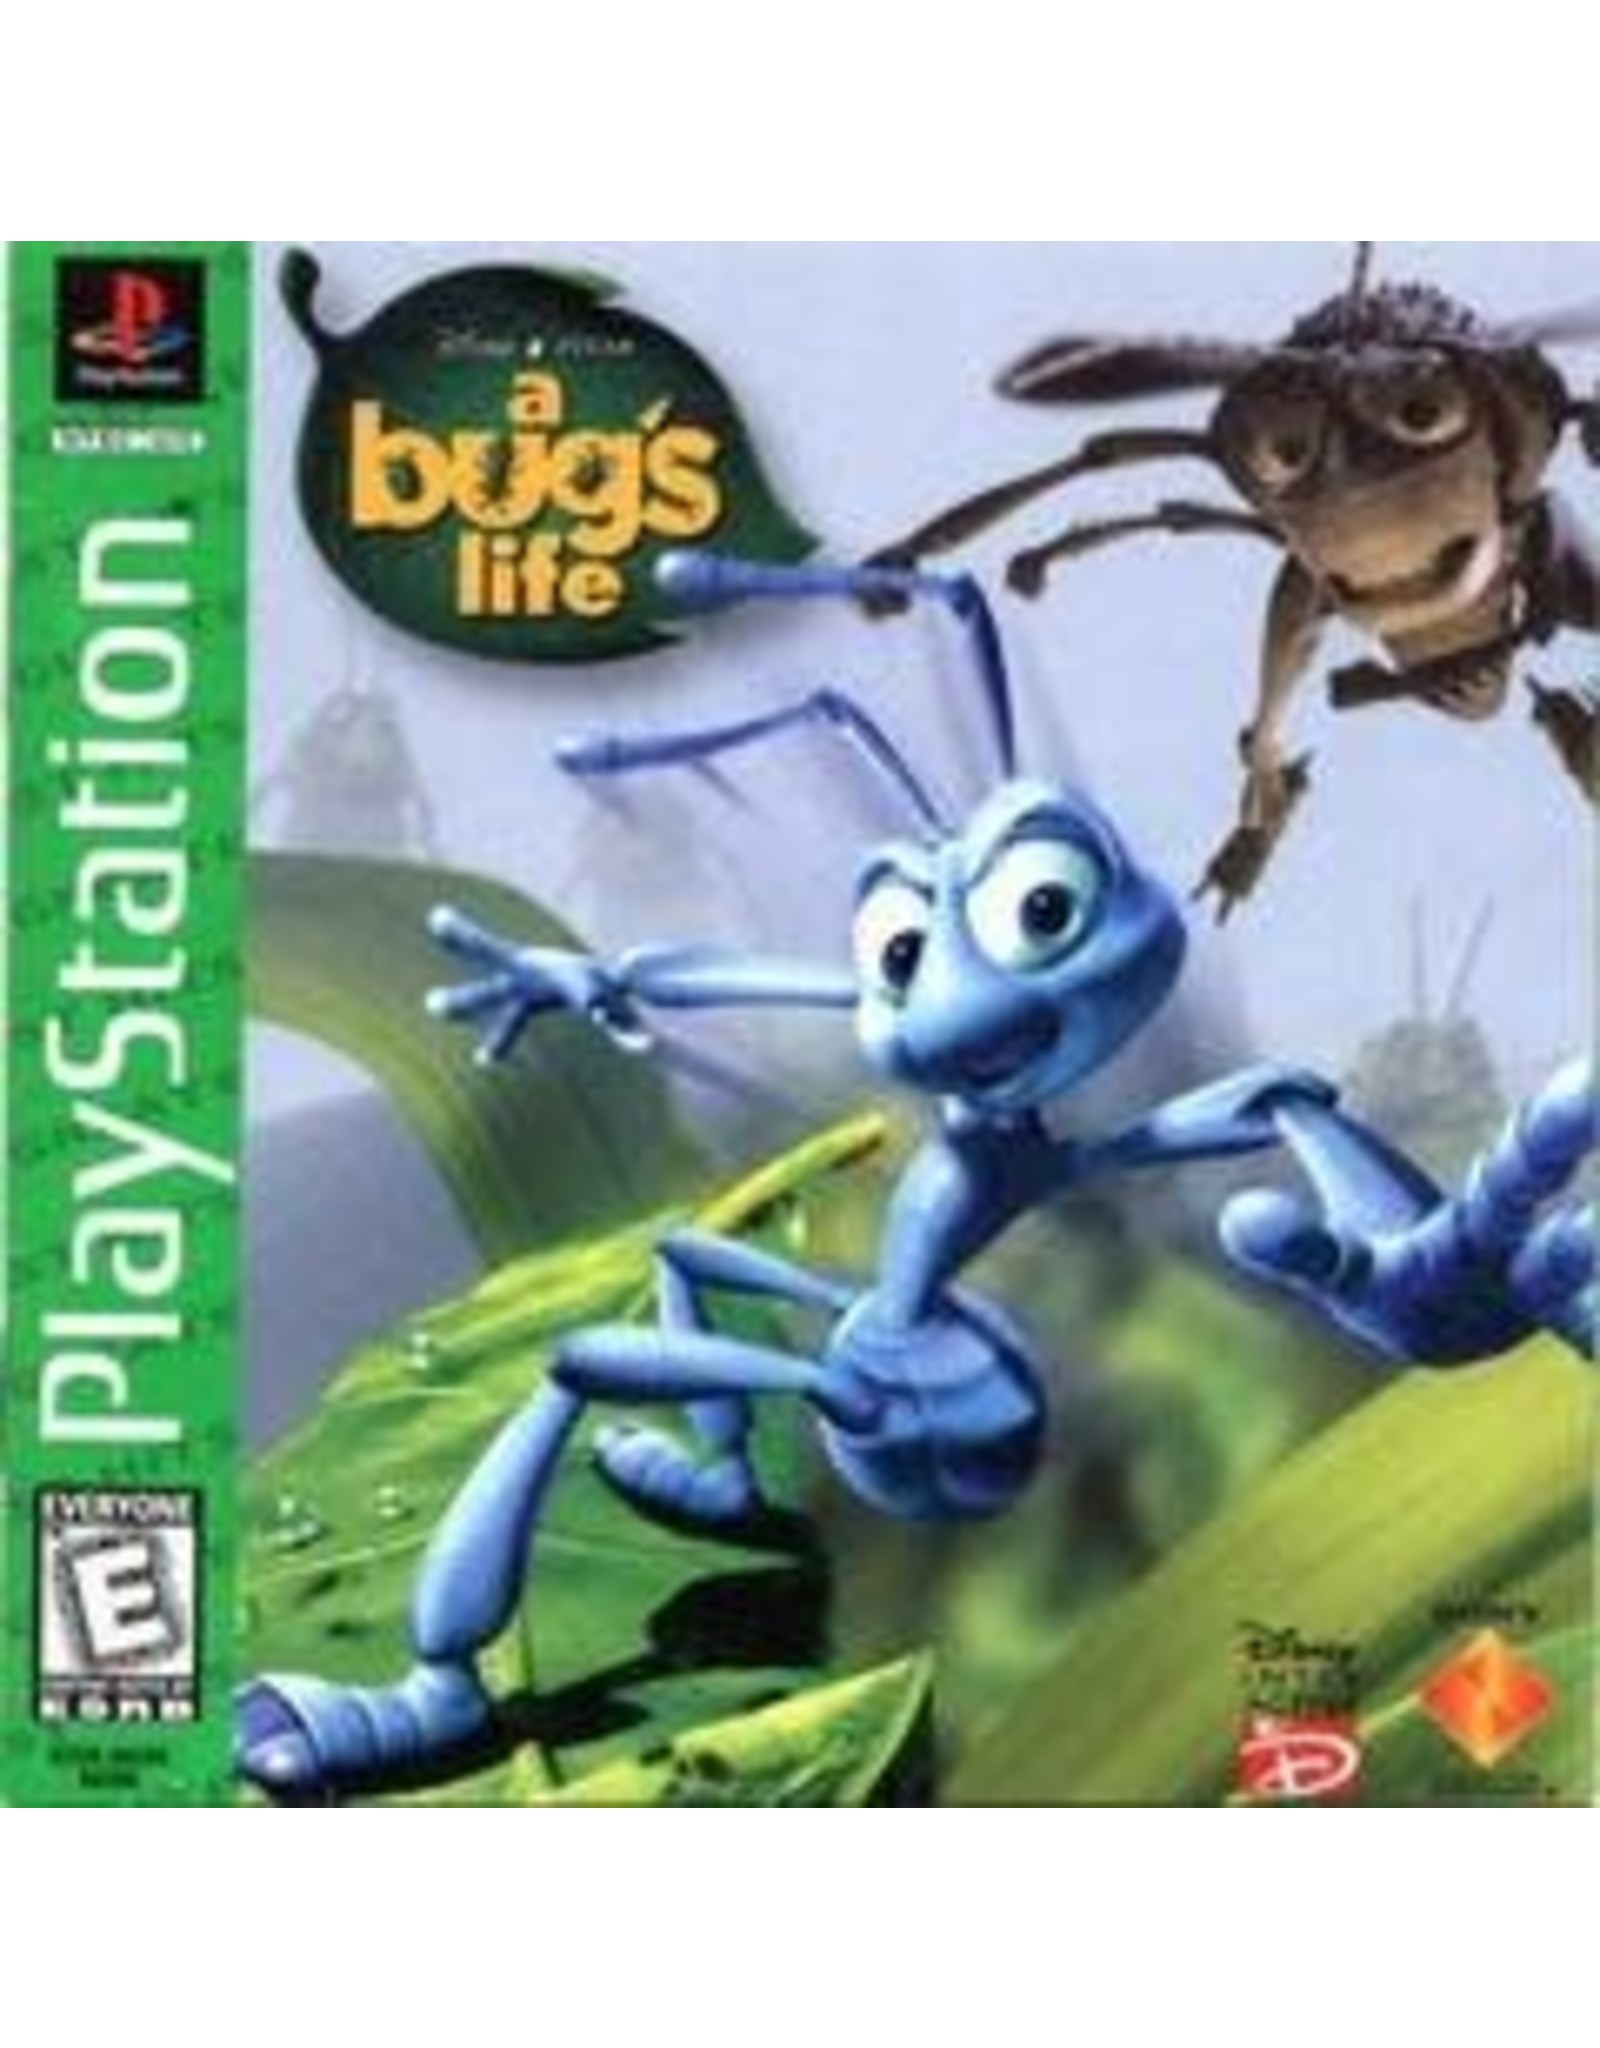 Playstation A Bug's Life Greatest Hits (CiB)